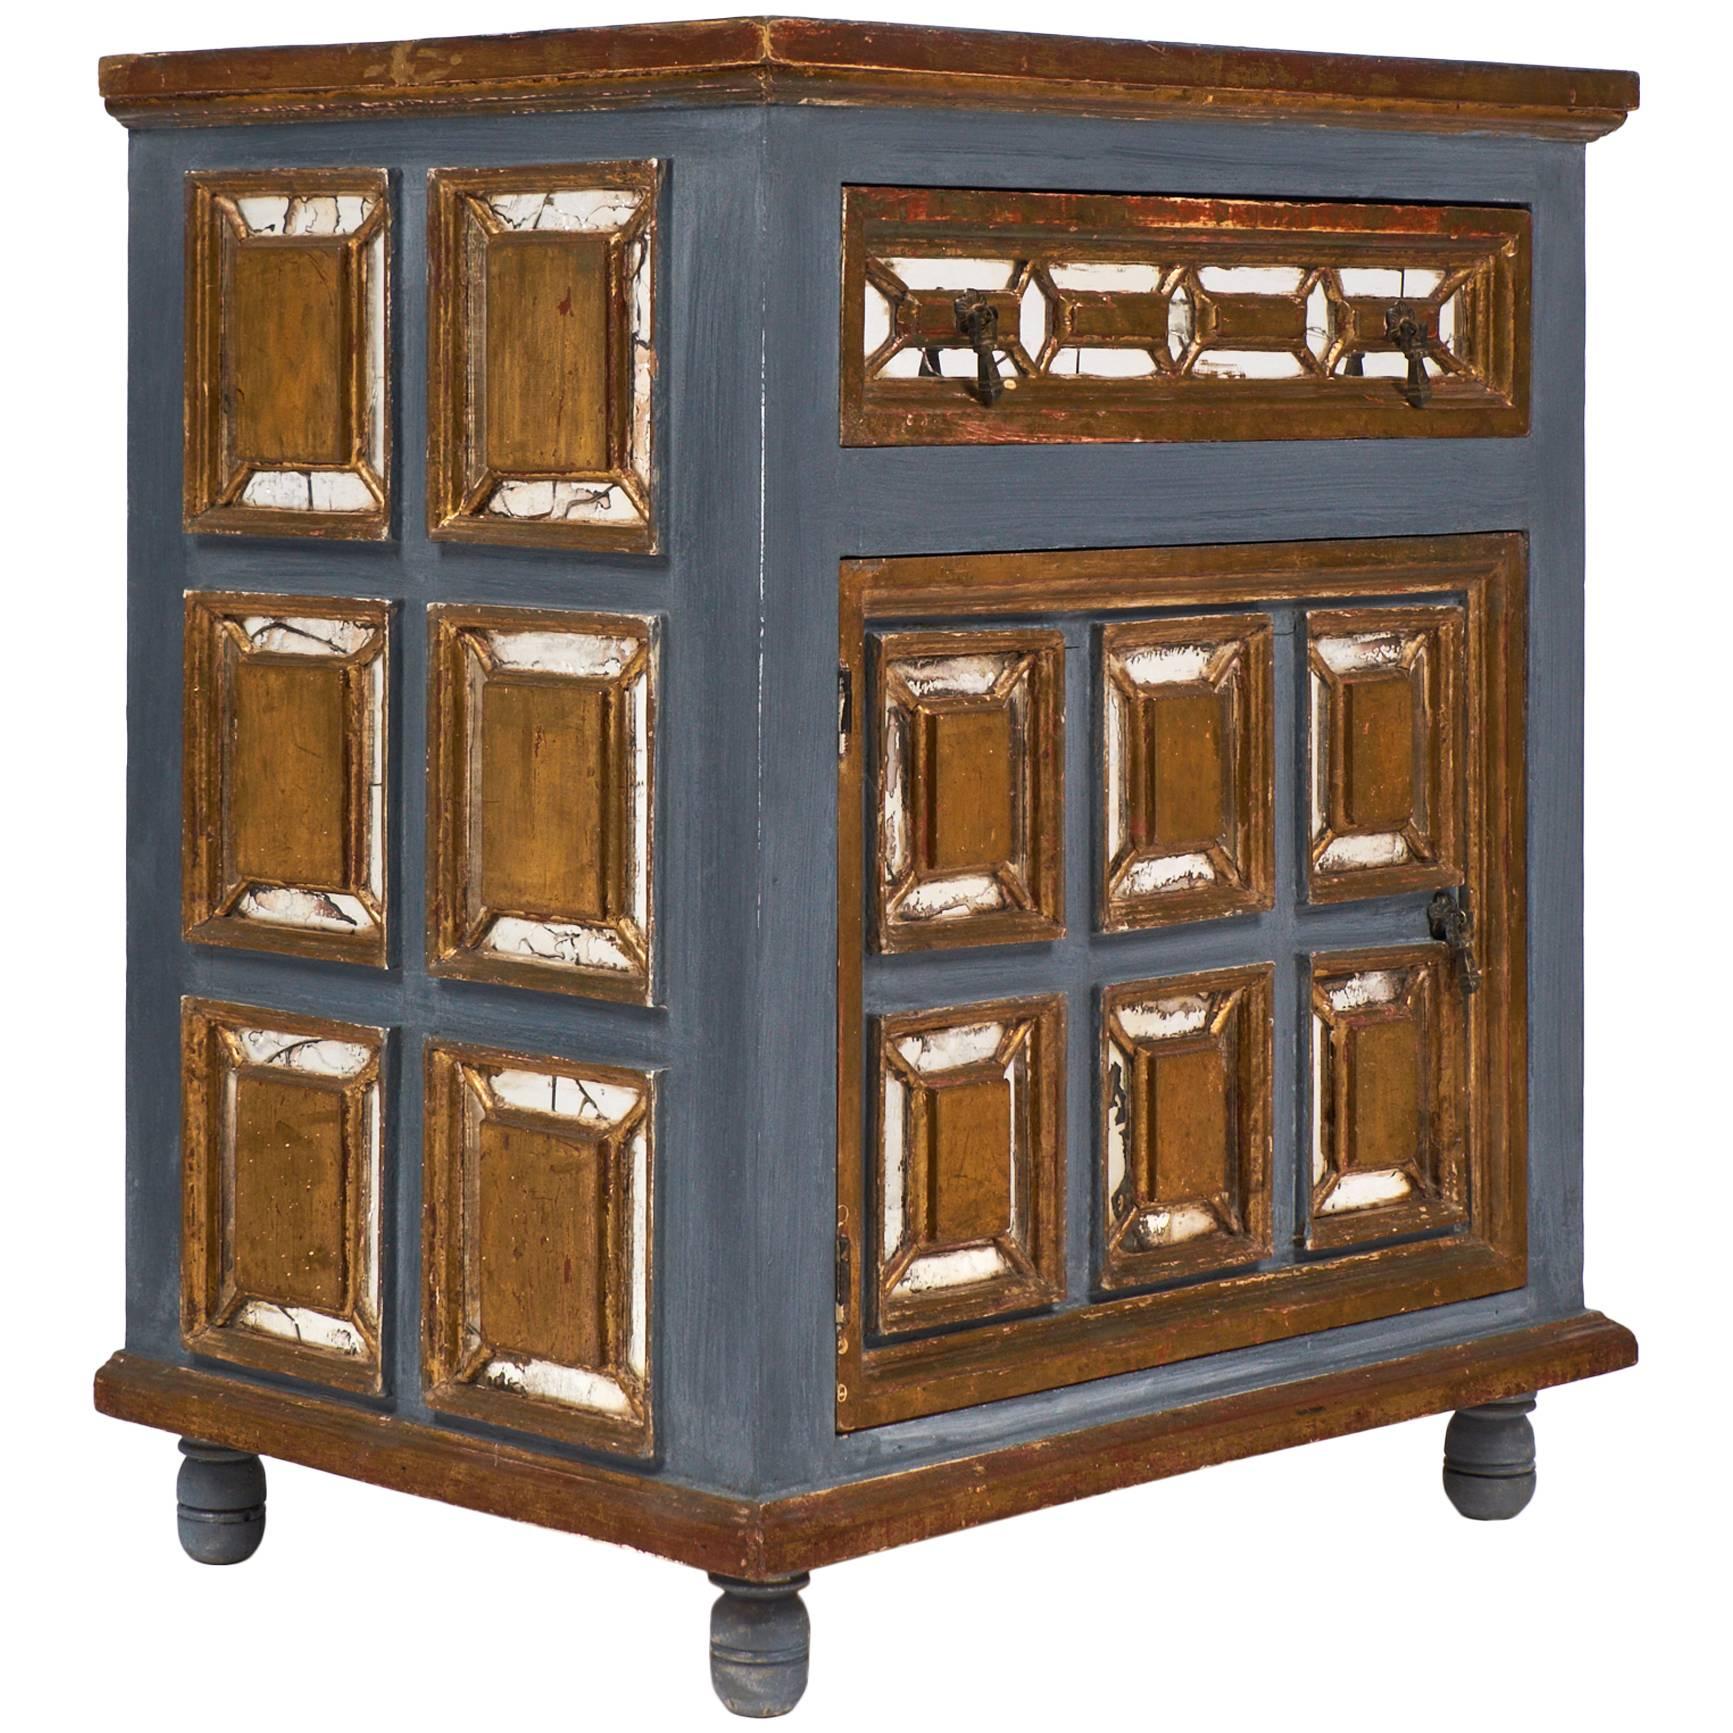  Antique Mirrored Venetian Cabinet or Nightstand